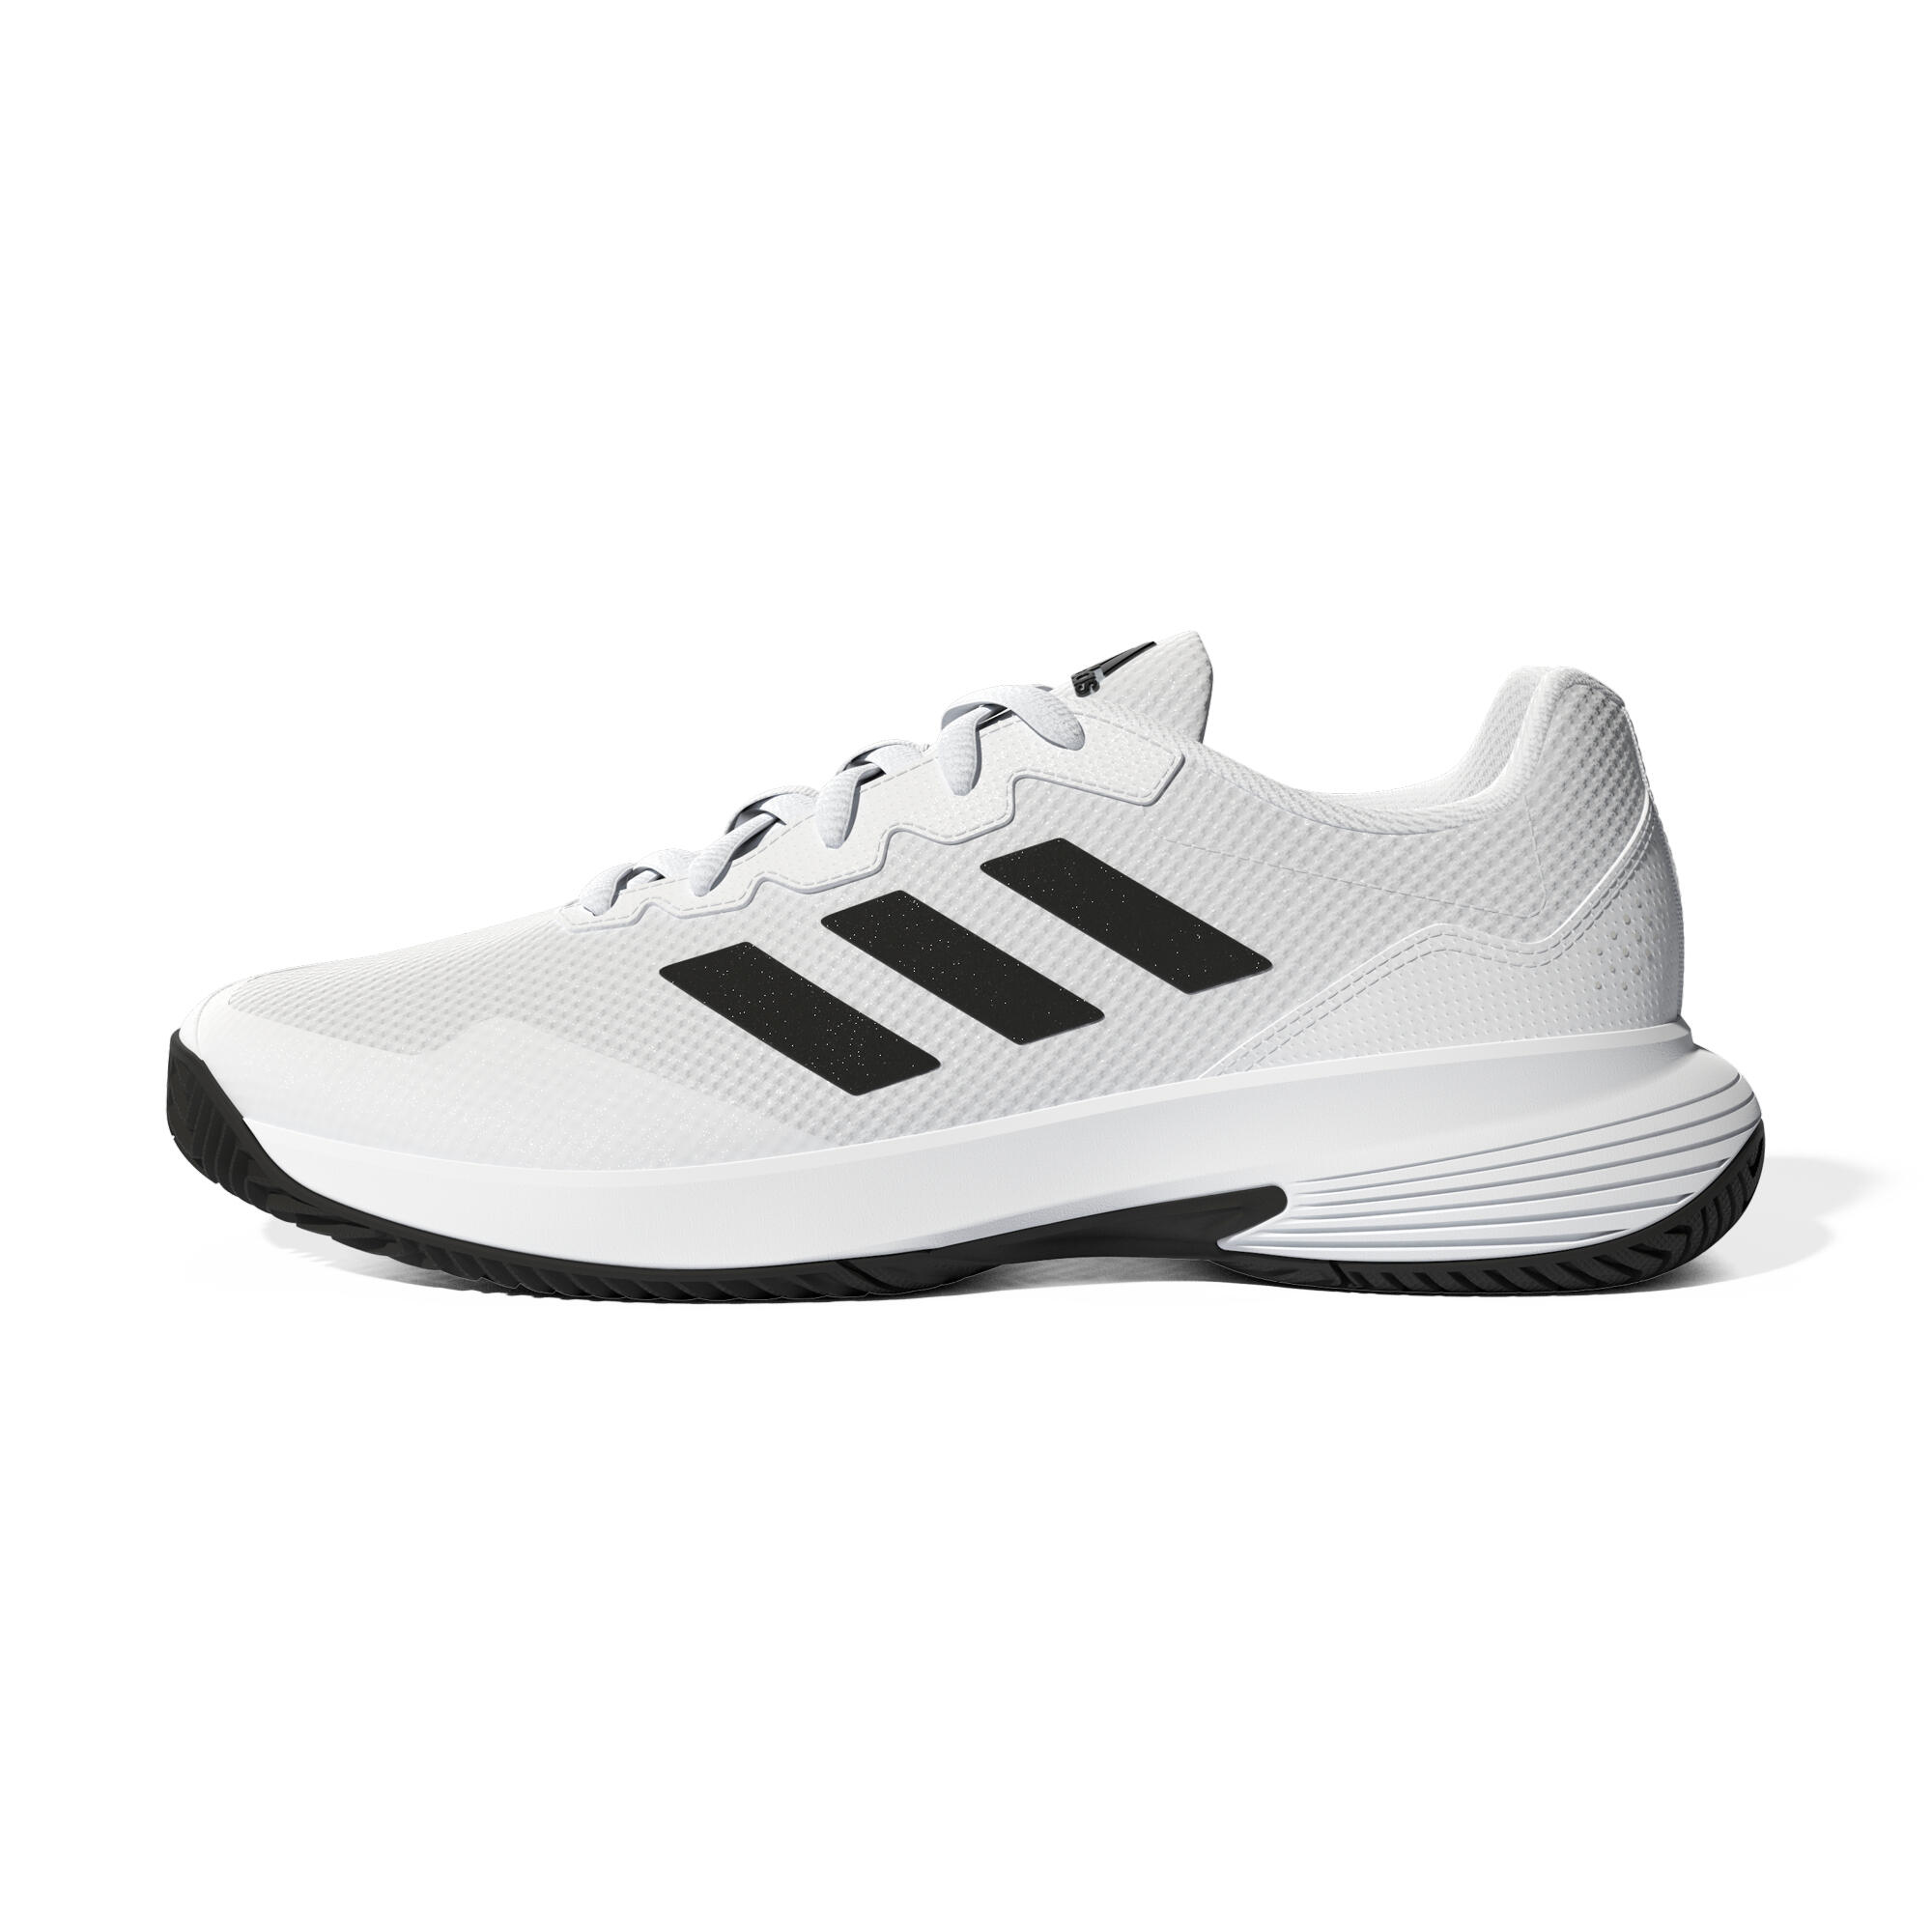 Men's Multicourt Tennis Shoes Gamecourt - White/Black 4/8